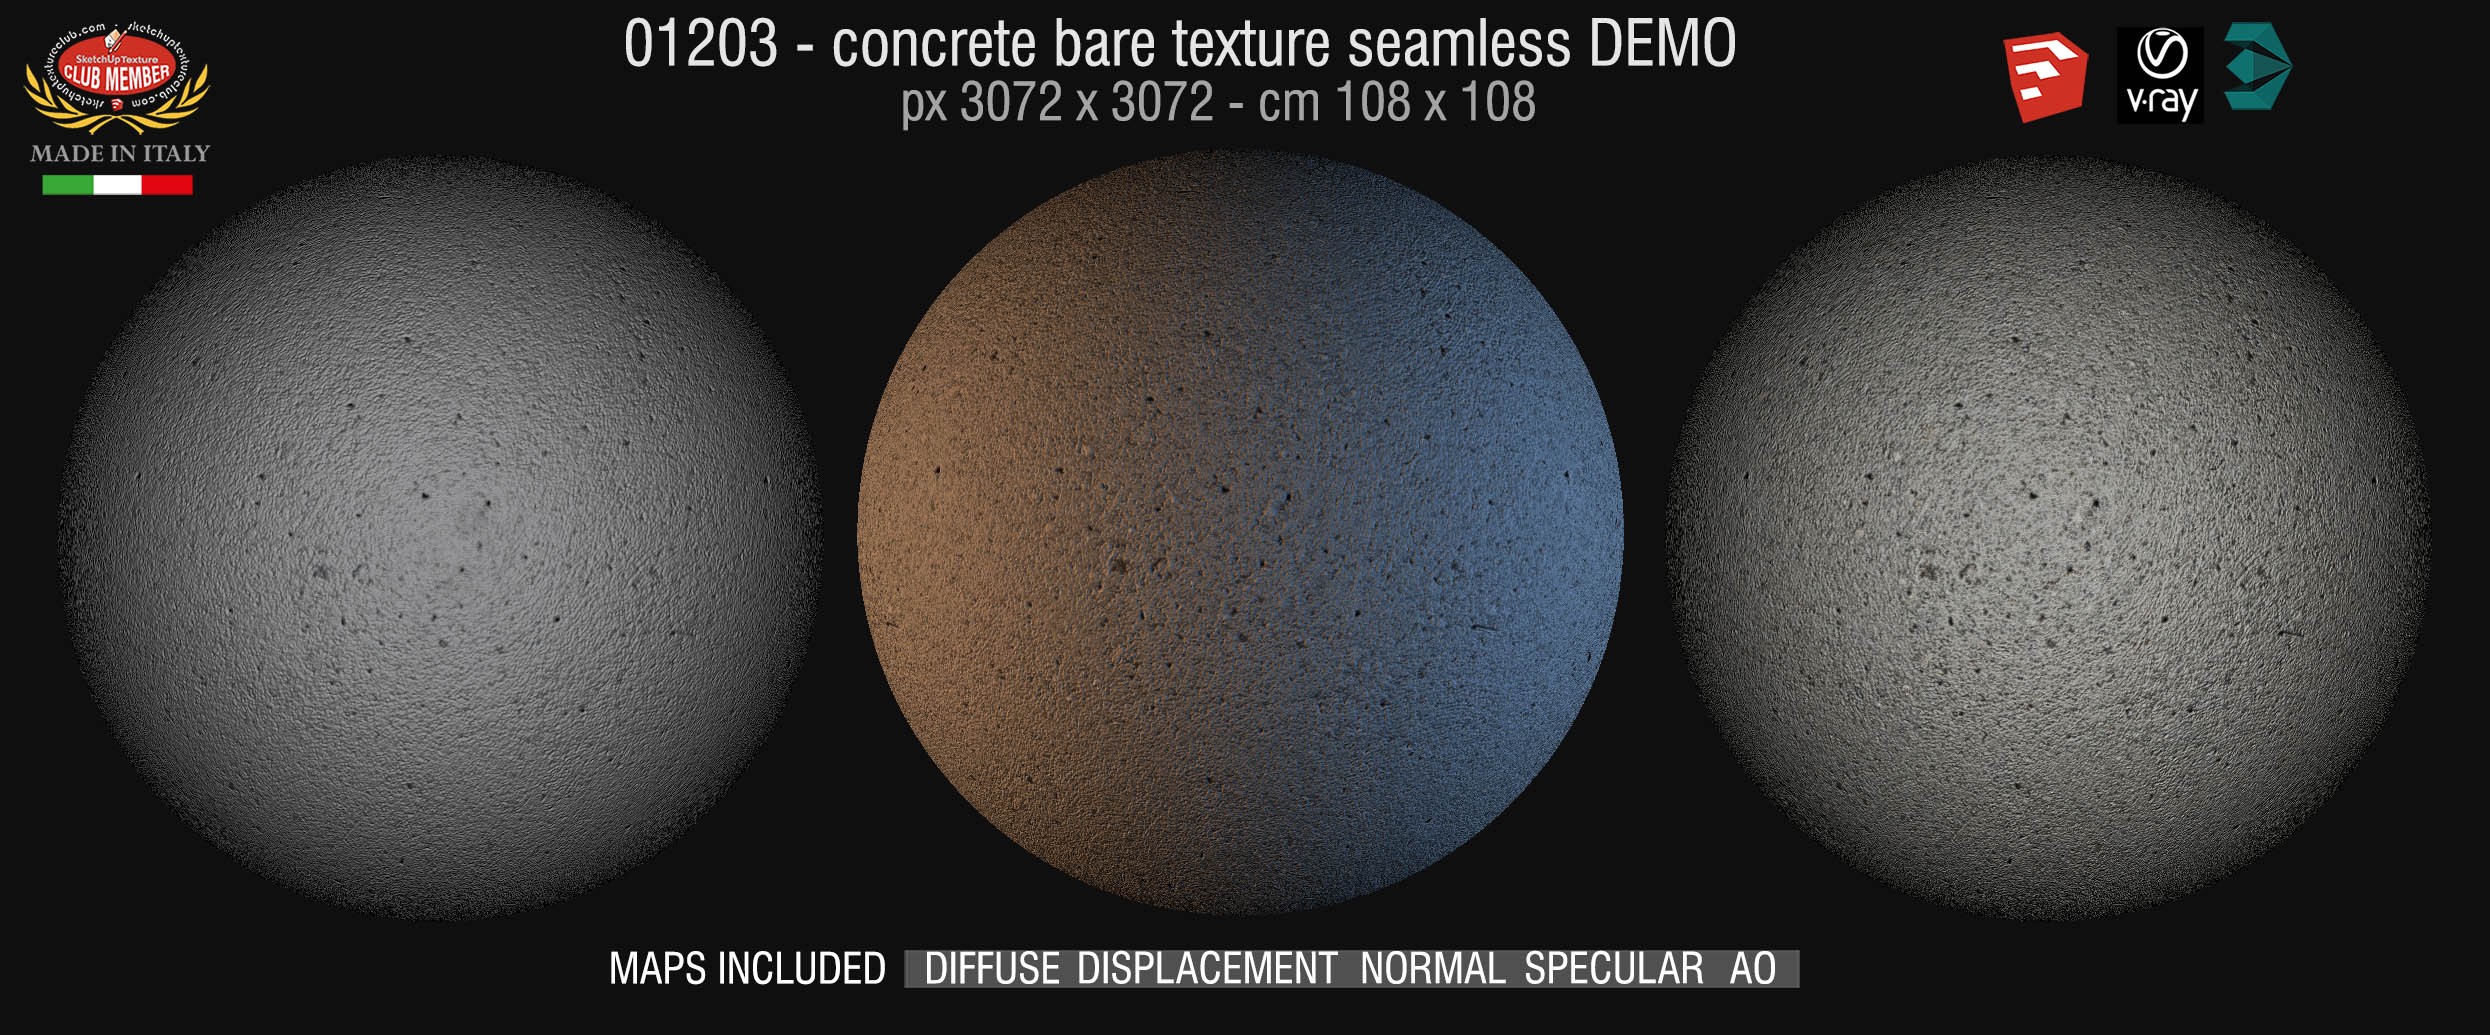 01203 HR Concrete bare clean texture + maps DEMO